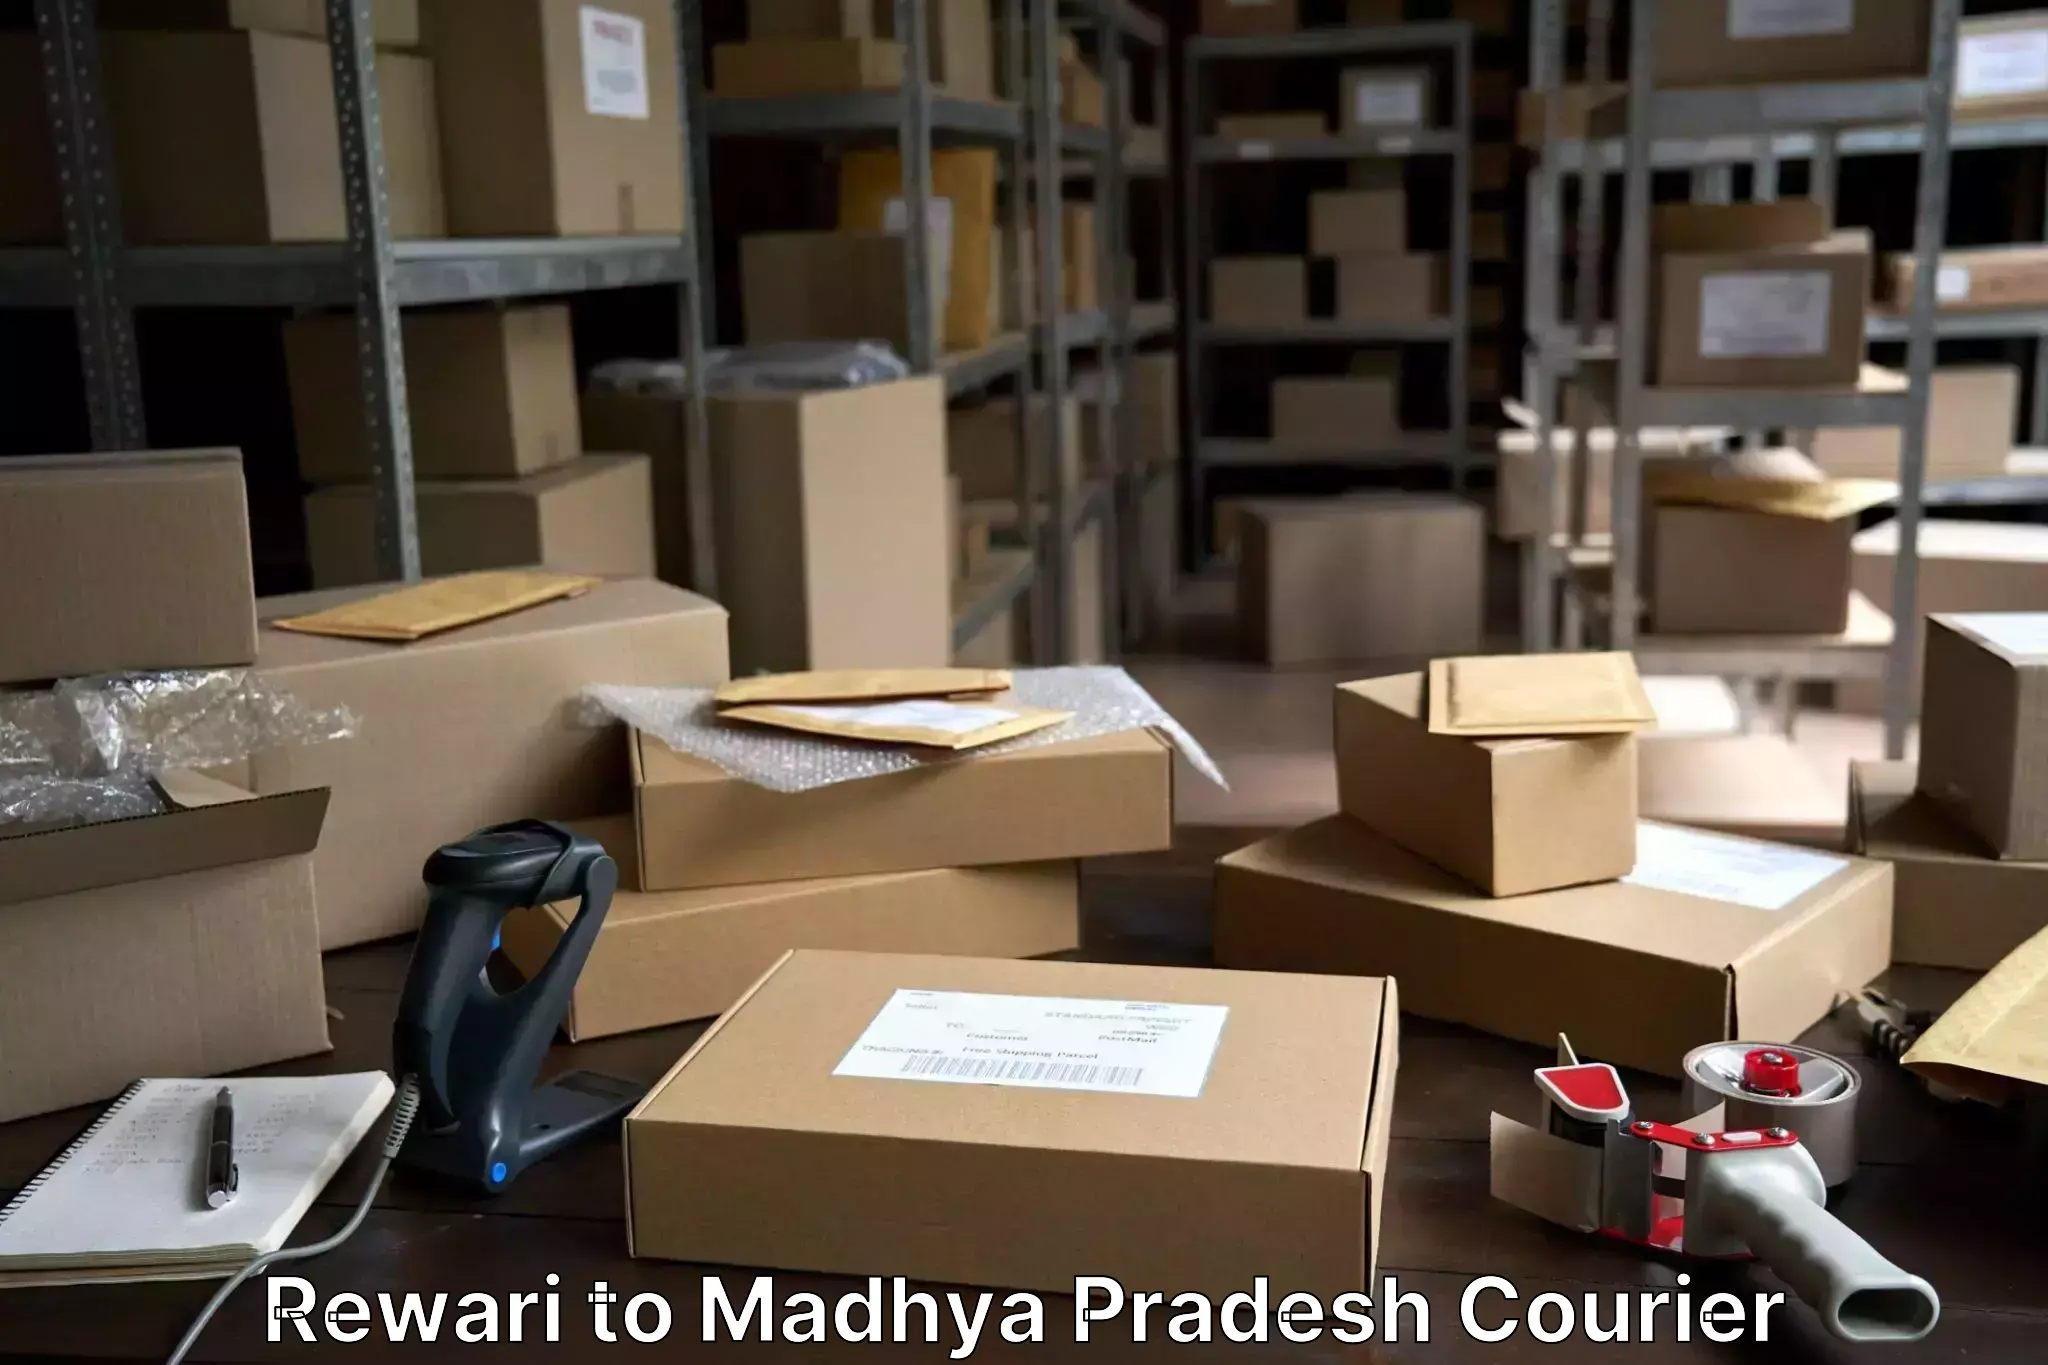 Luggage shipment processing Rewari to Maheshwar